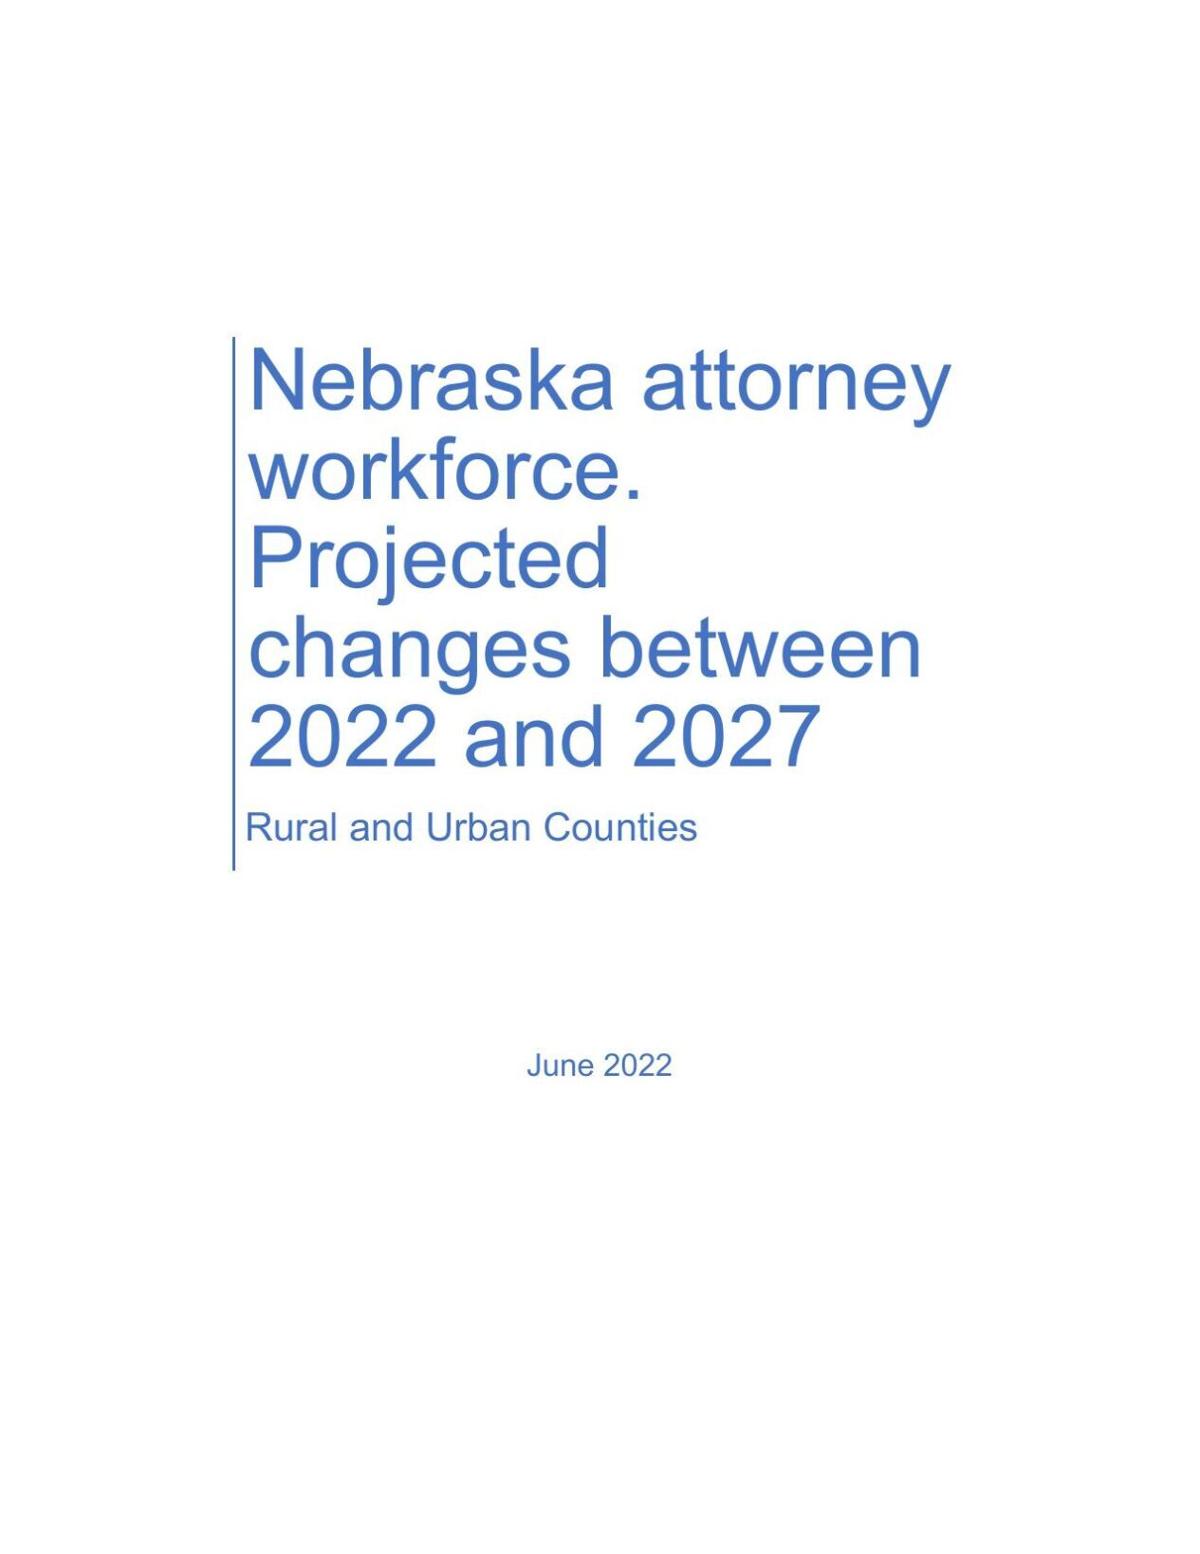 Read the report on Nebraska's attorney workforce